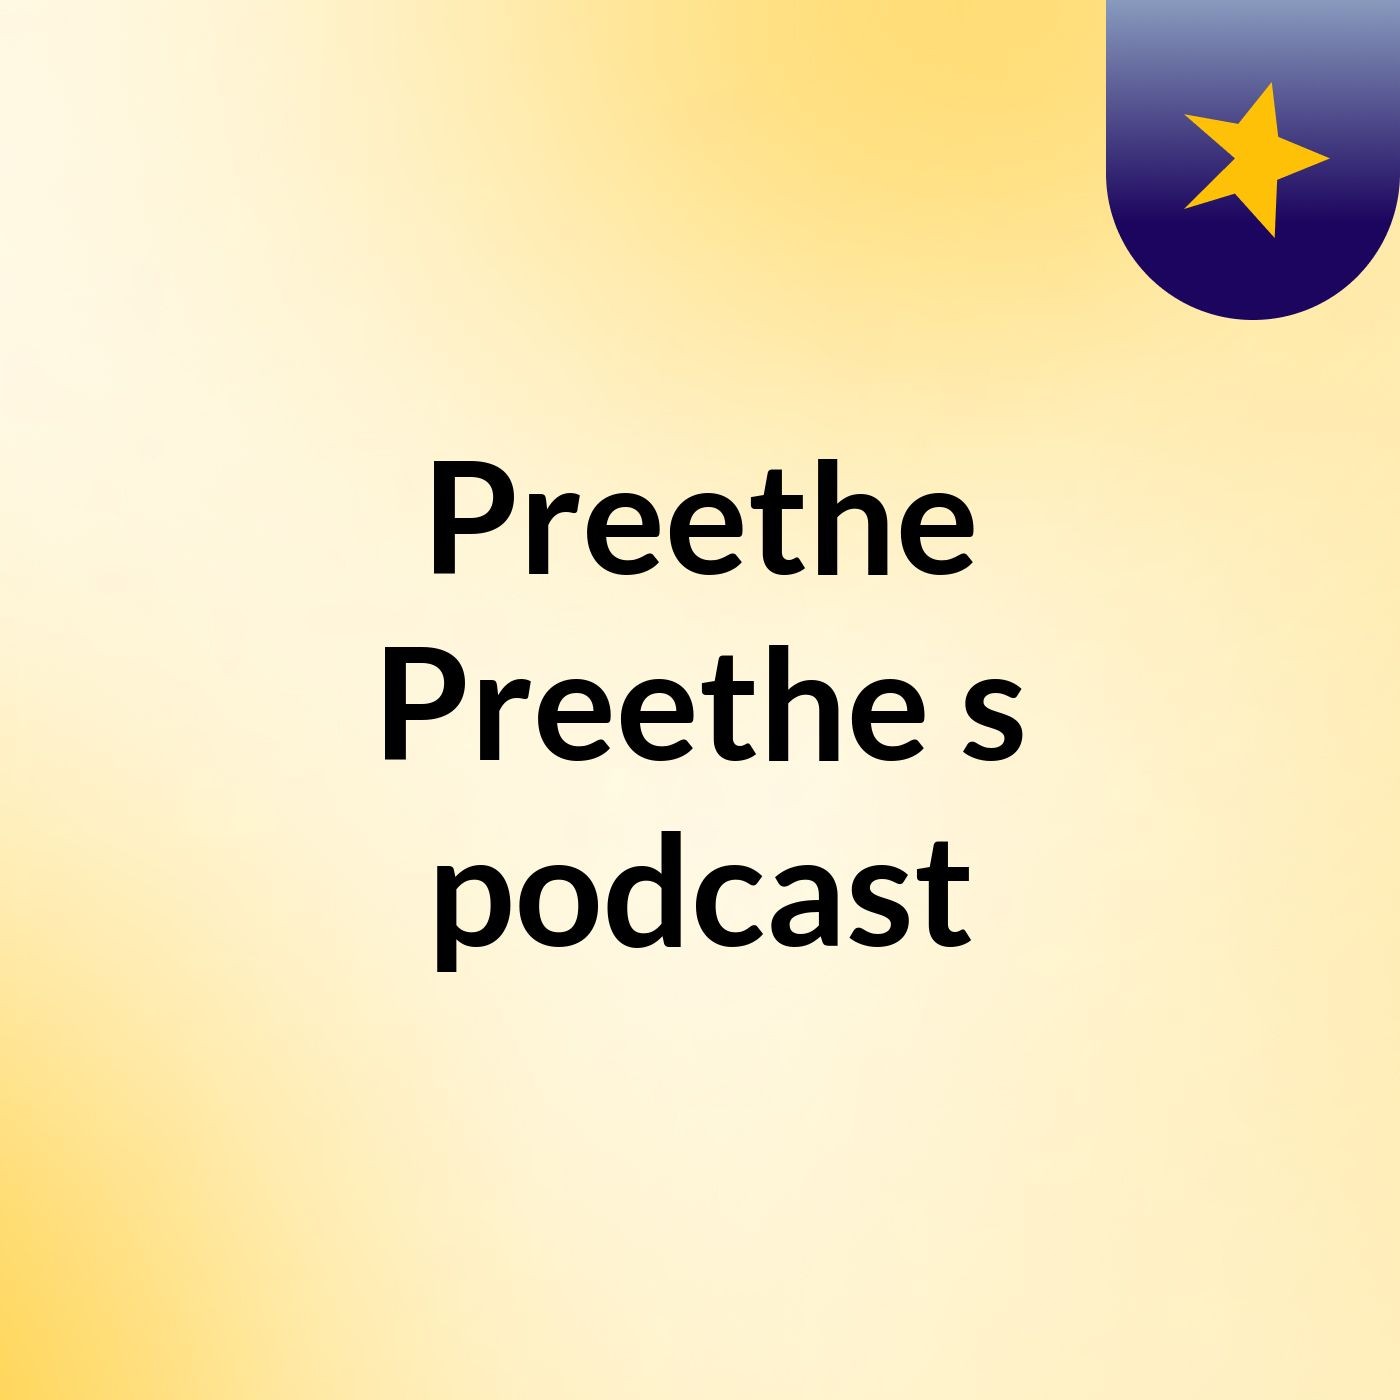 Preethe Preethe's podcast